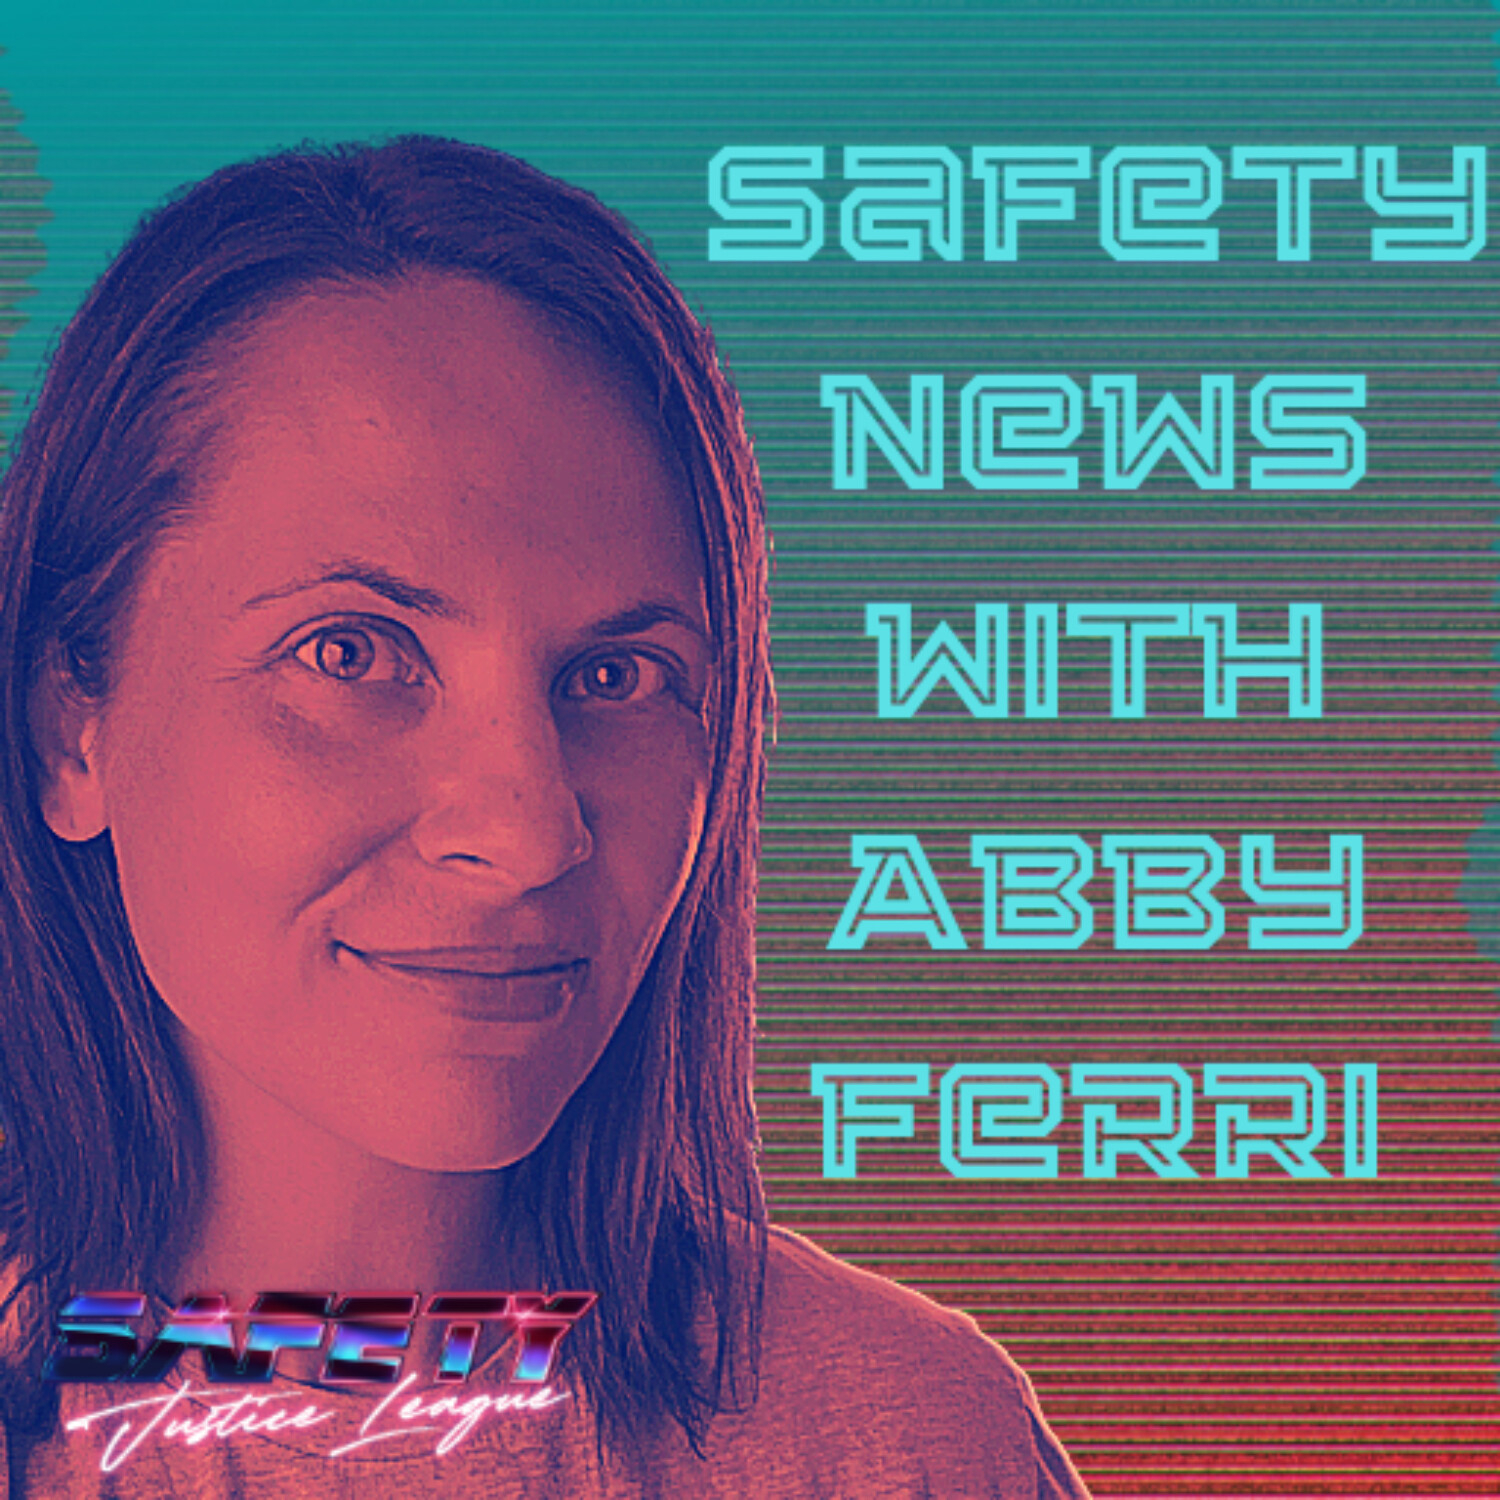 SJL Sh0rts: Safety News w/Abby Ferri - August 3, 2020